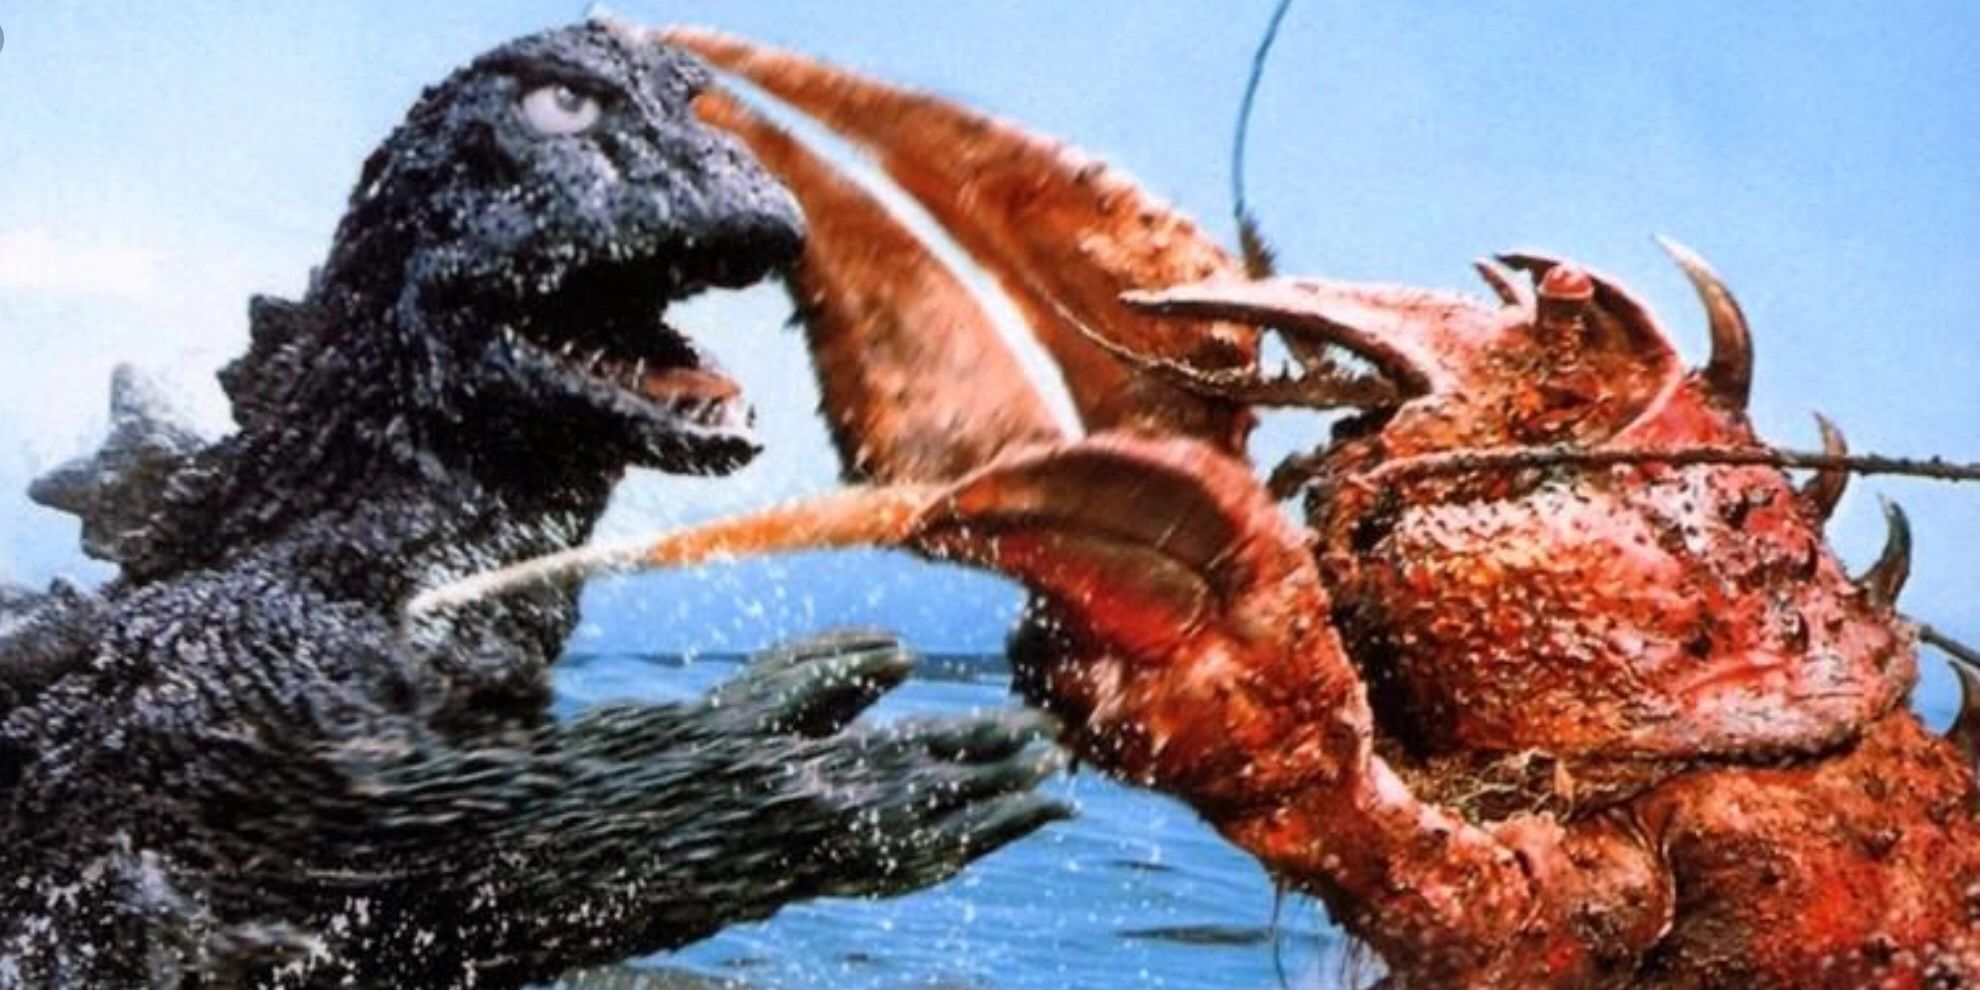 Godzilla Versus Ebirah from Ebirah, Horror of the Deep